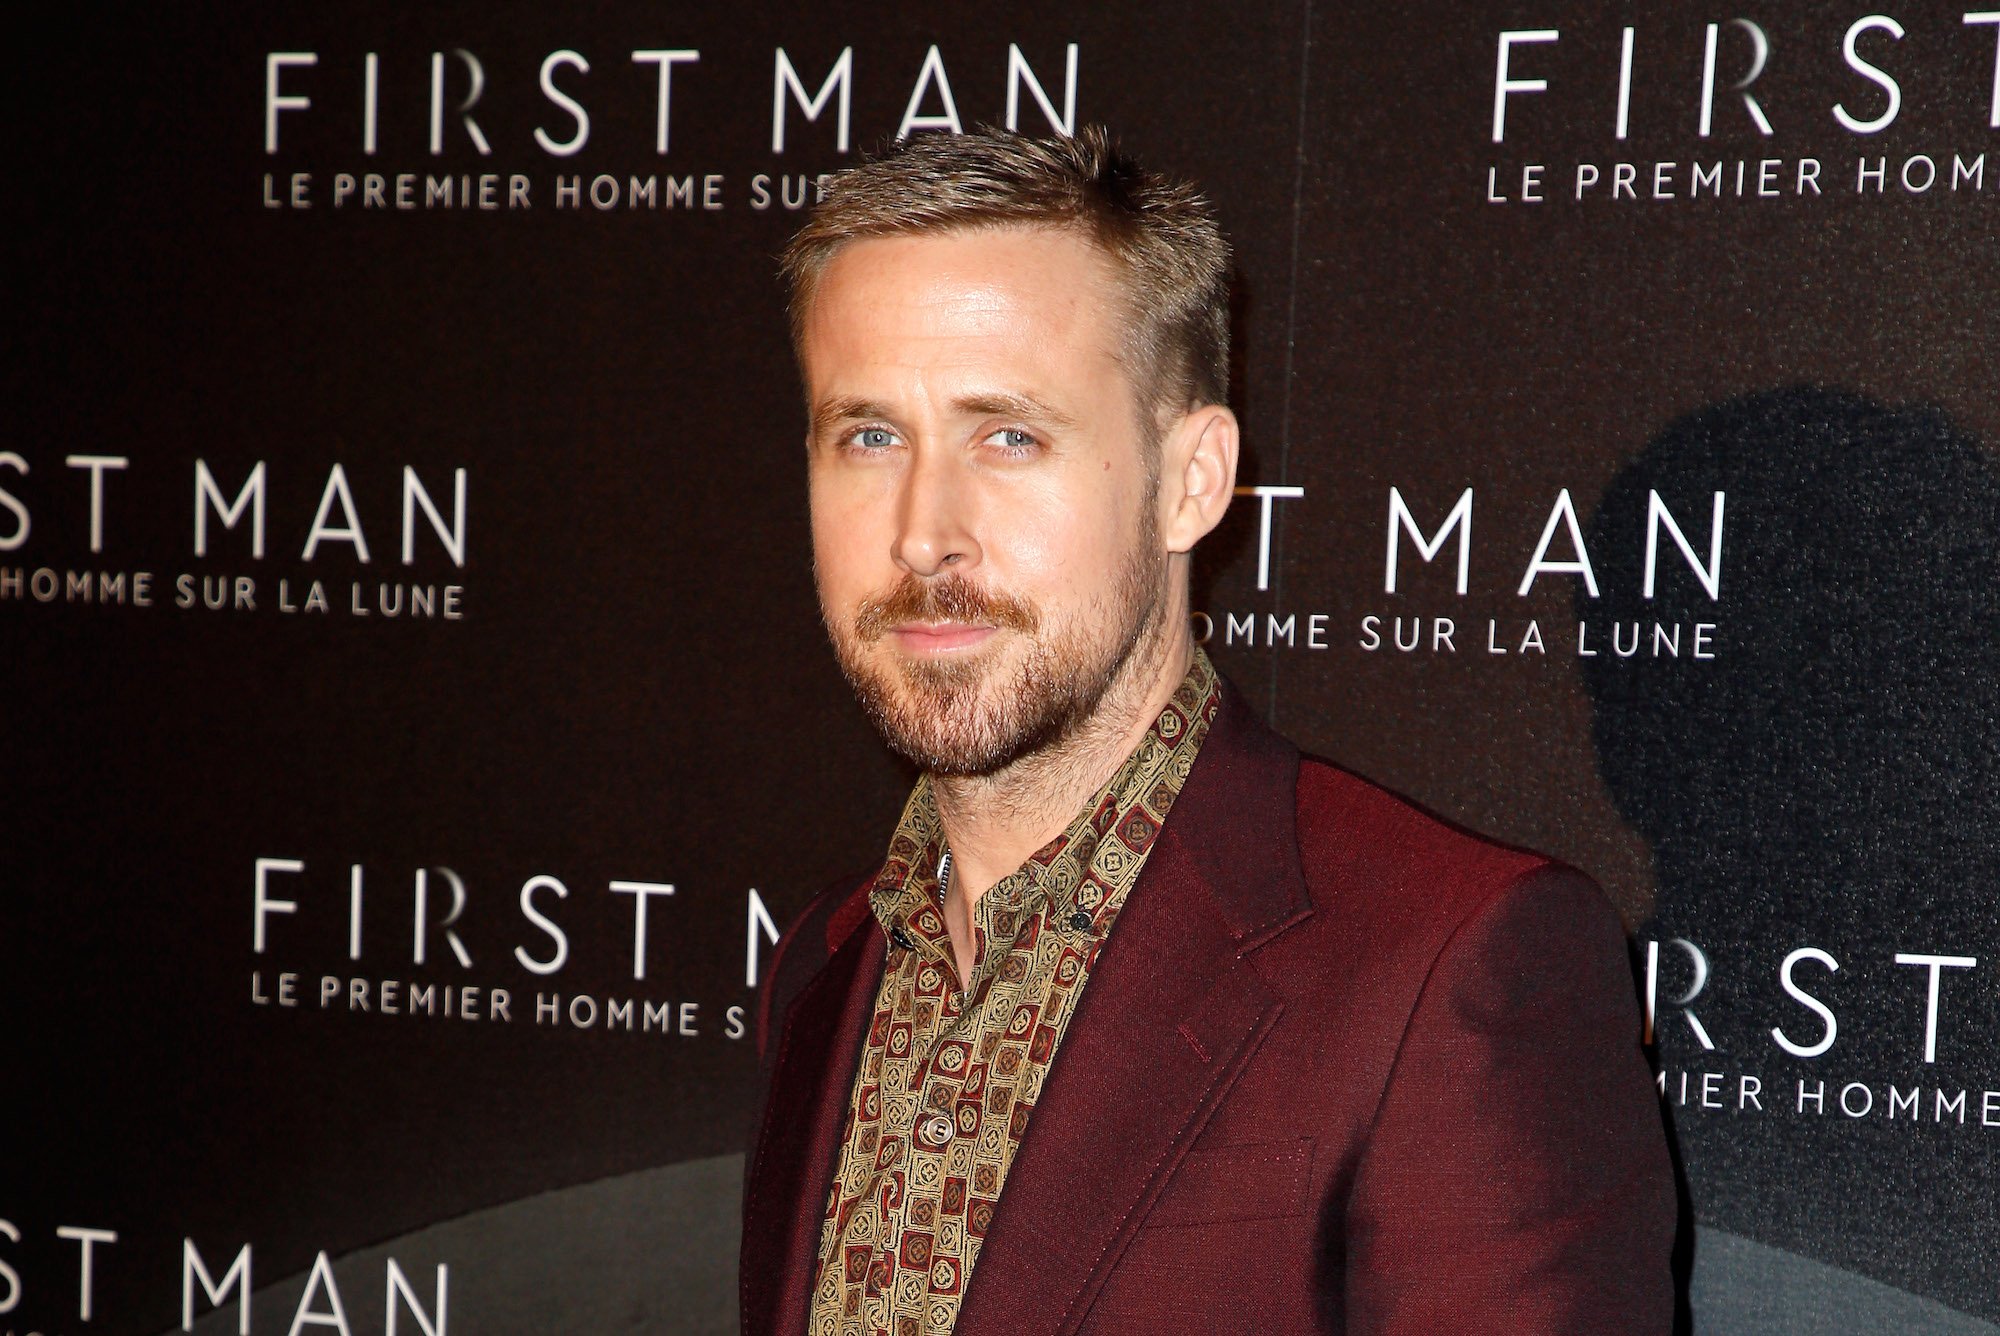 Ryan Gosling on the red carpet